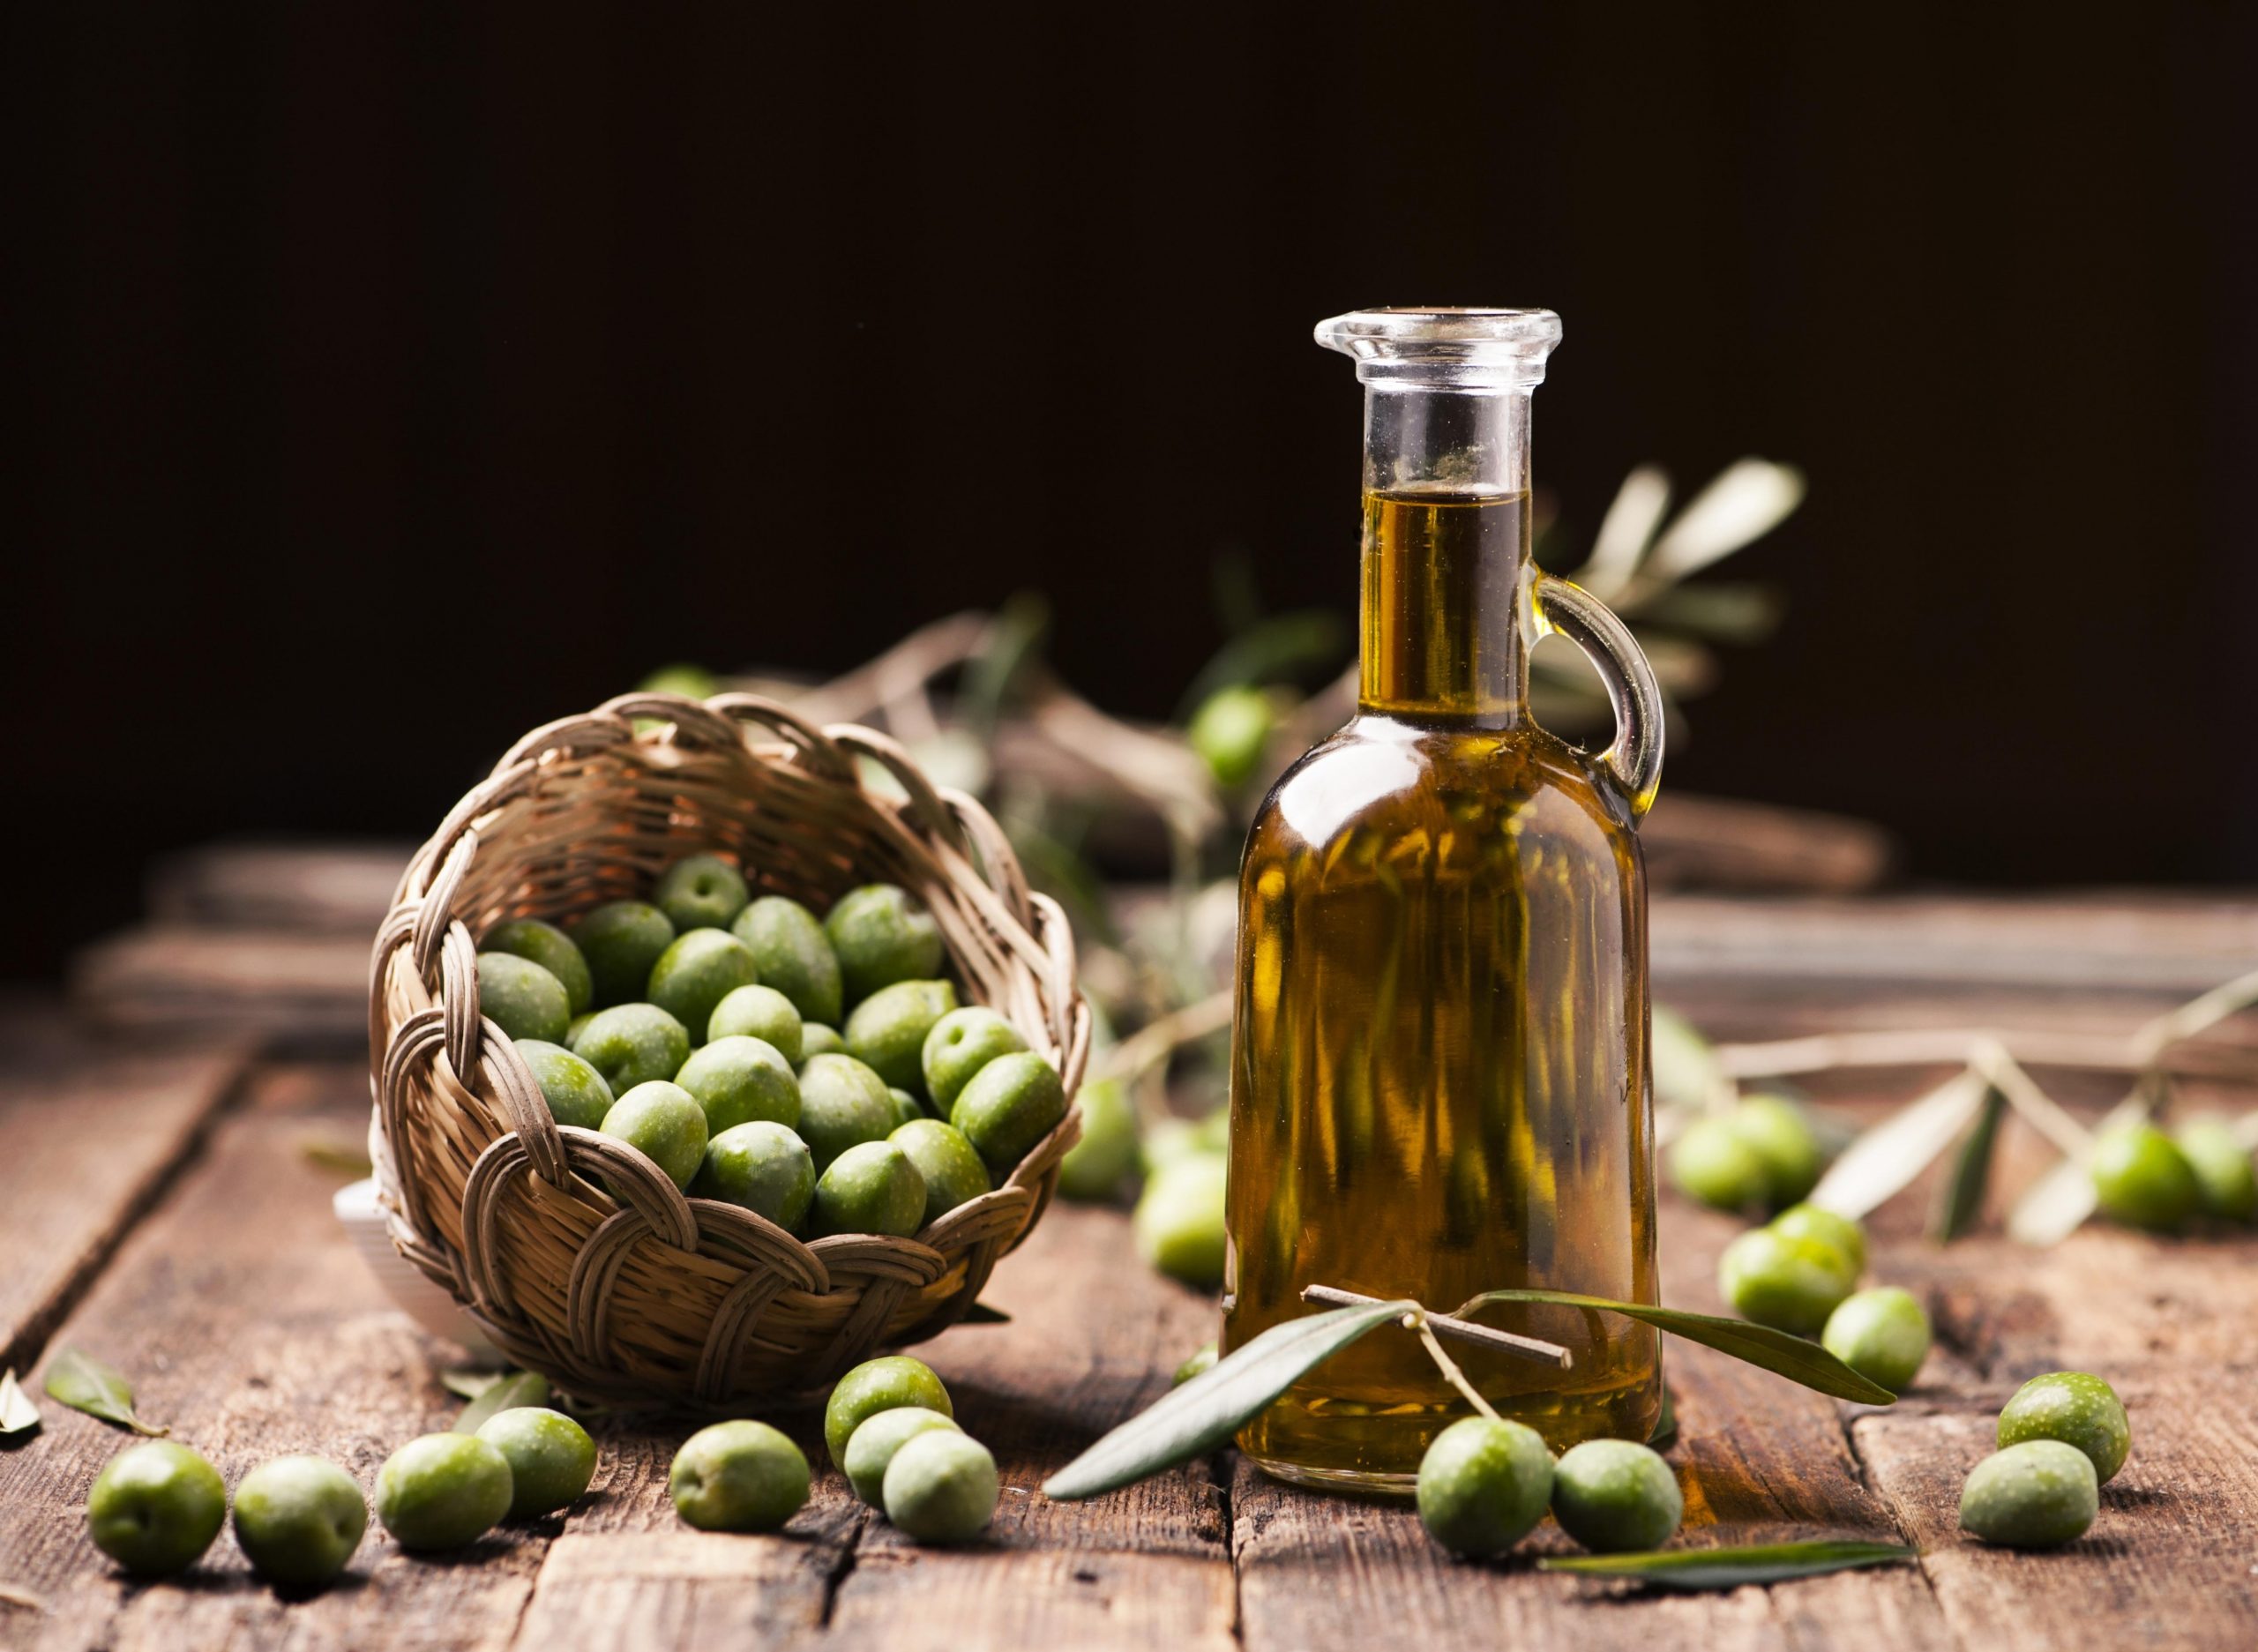 Оливковое масло в пост. Oliva Extra Virgin Olive Oil. Olive Oil масло оливковое. Оливковое масло в древней Греции. Олив Ойл масло оливковое.